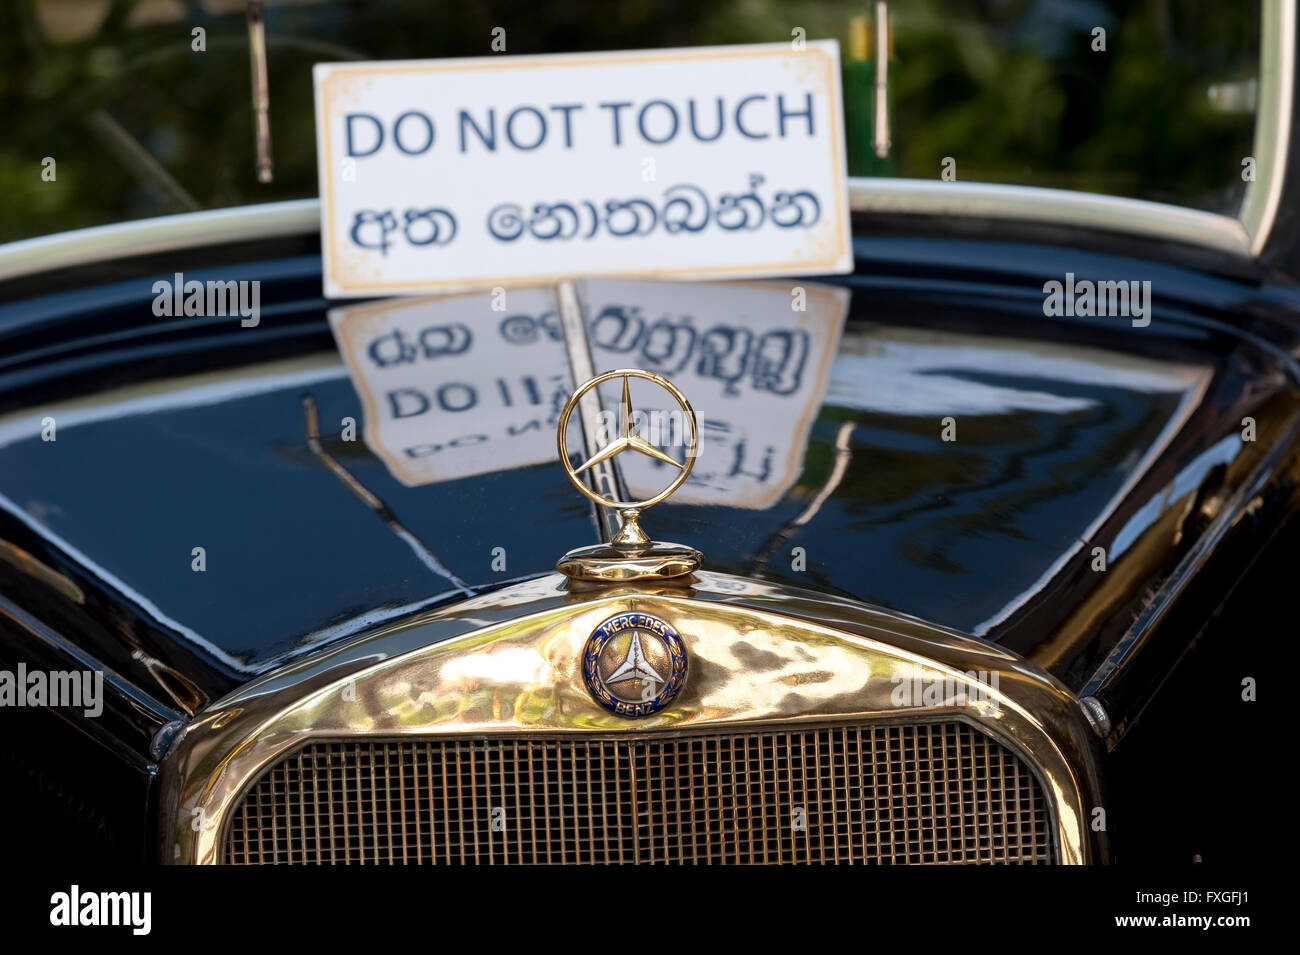 Sri Lanka, Colombo, vintage car, Mercedes Benz Stock Photo